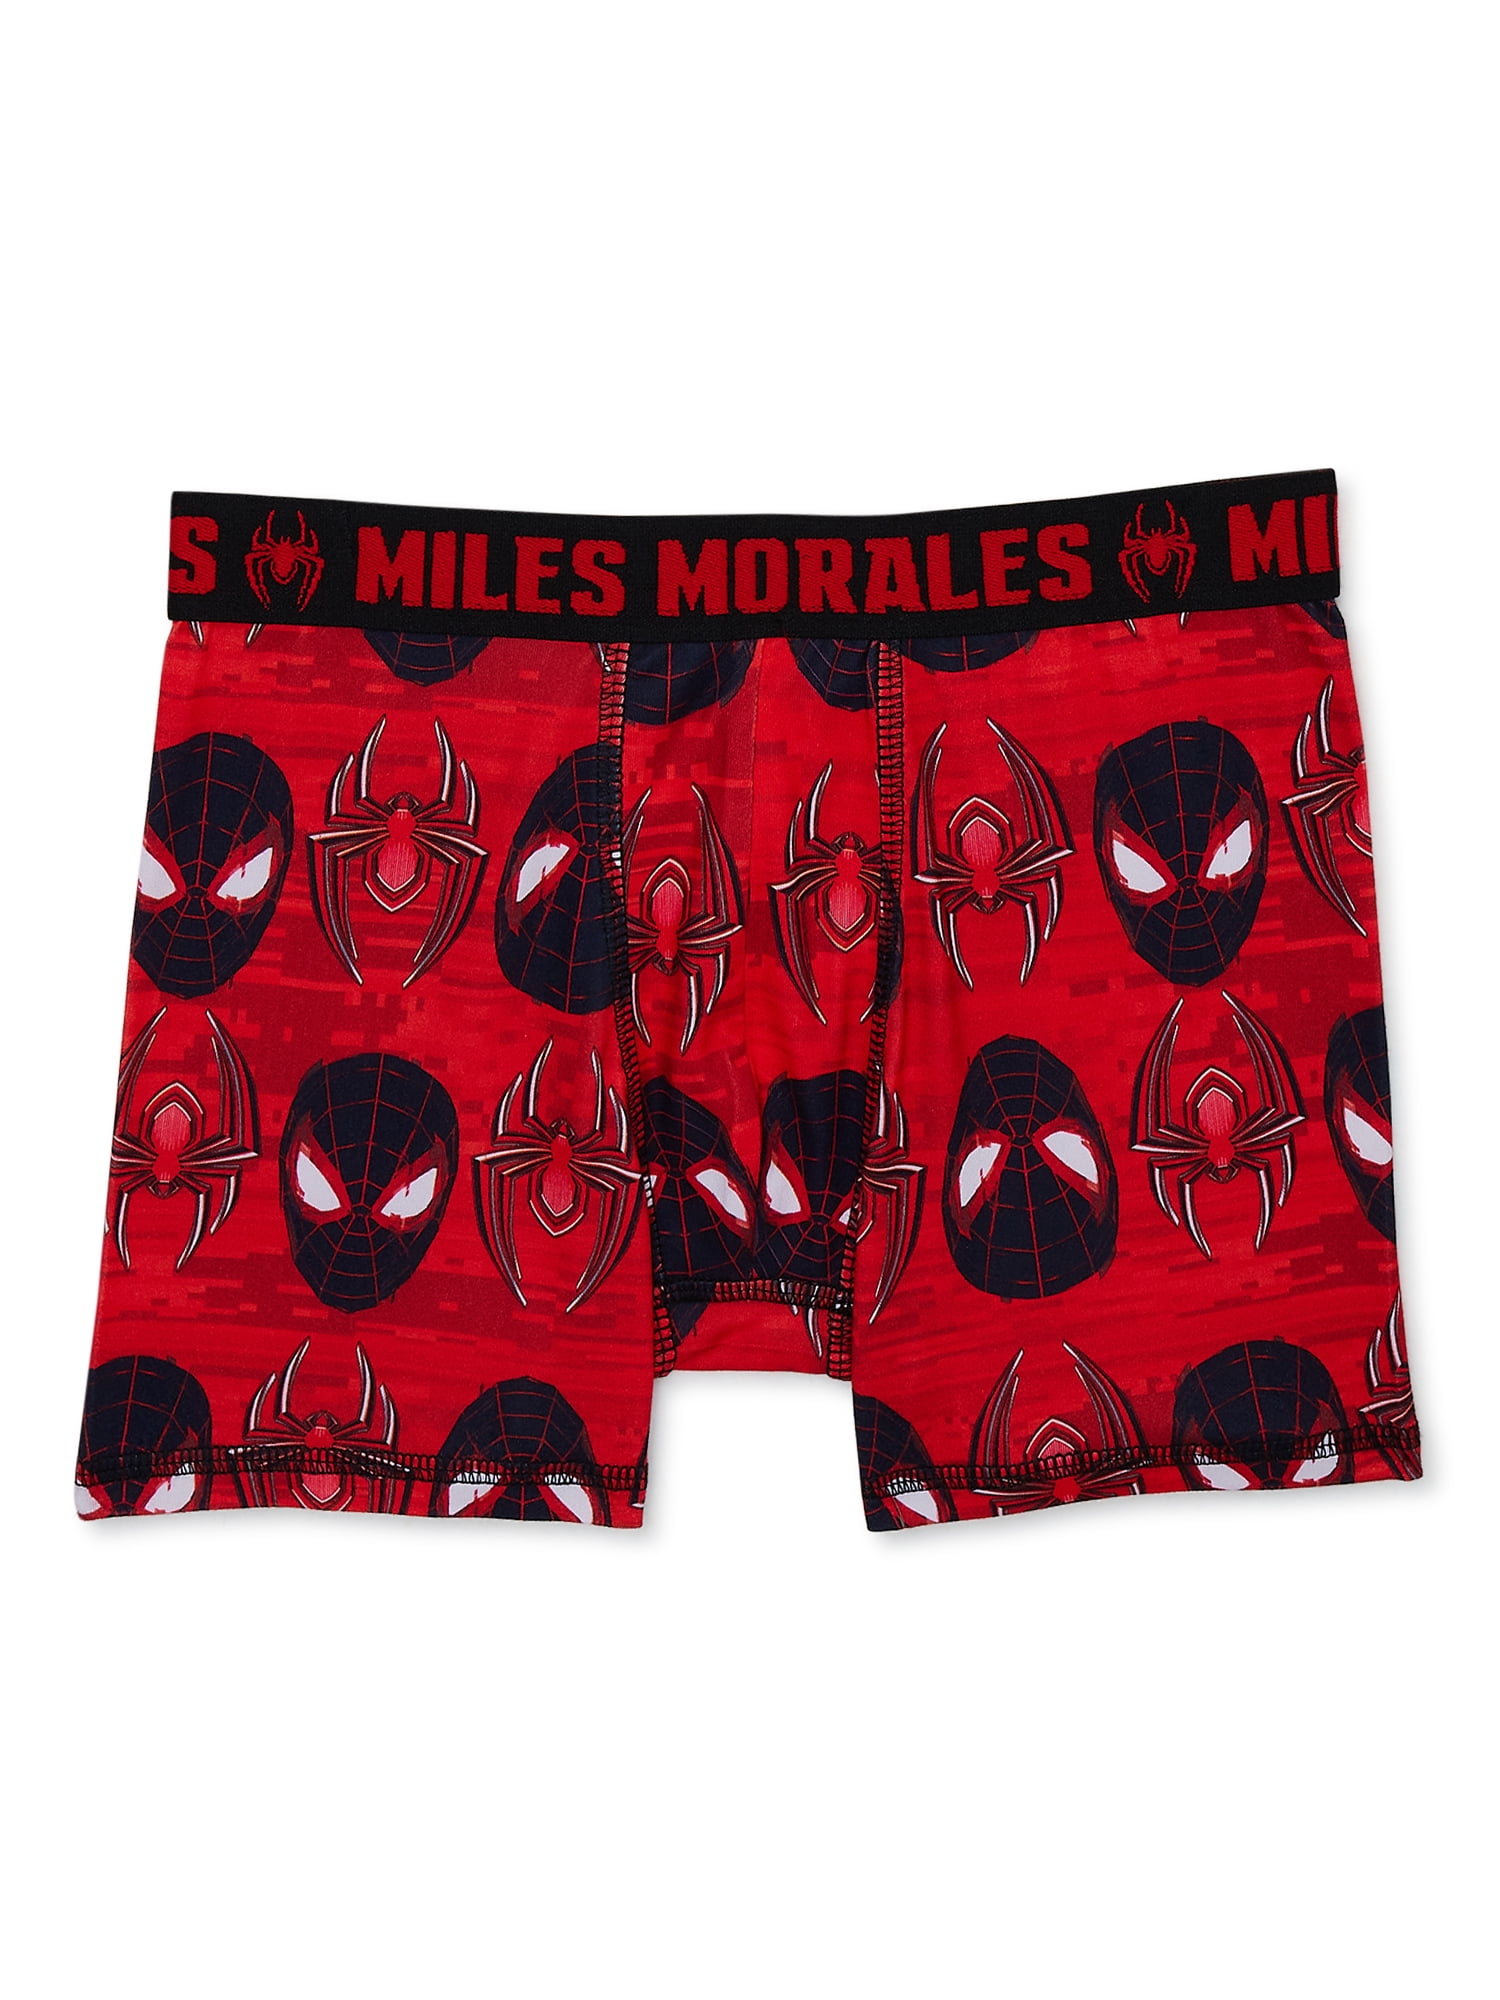 BONDS Spiderman Boys Brief 4 Pack, UXLC4R